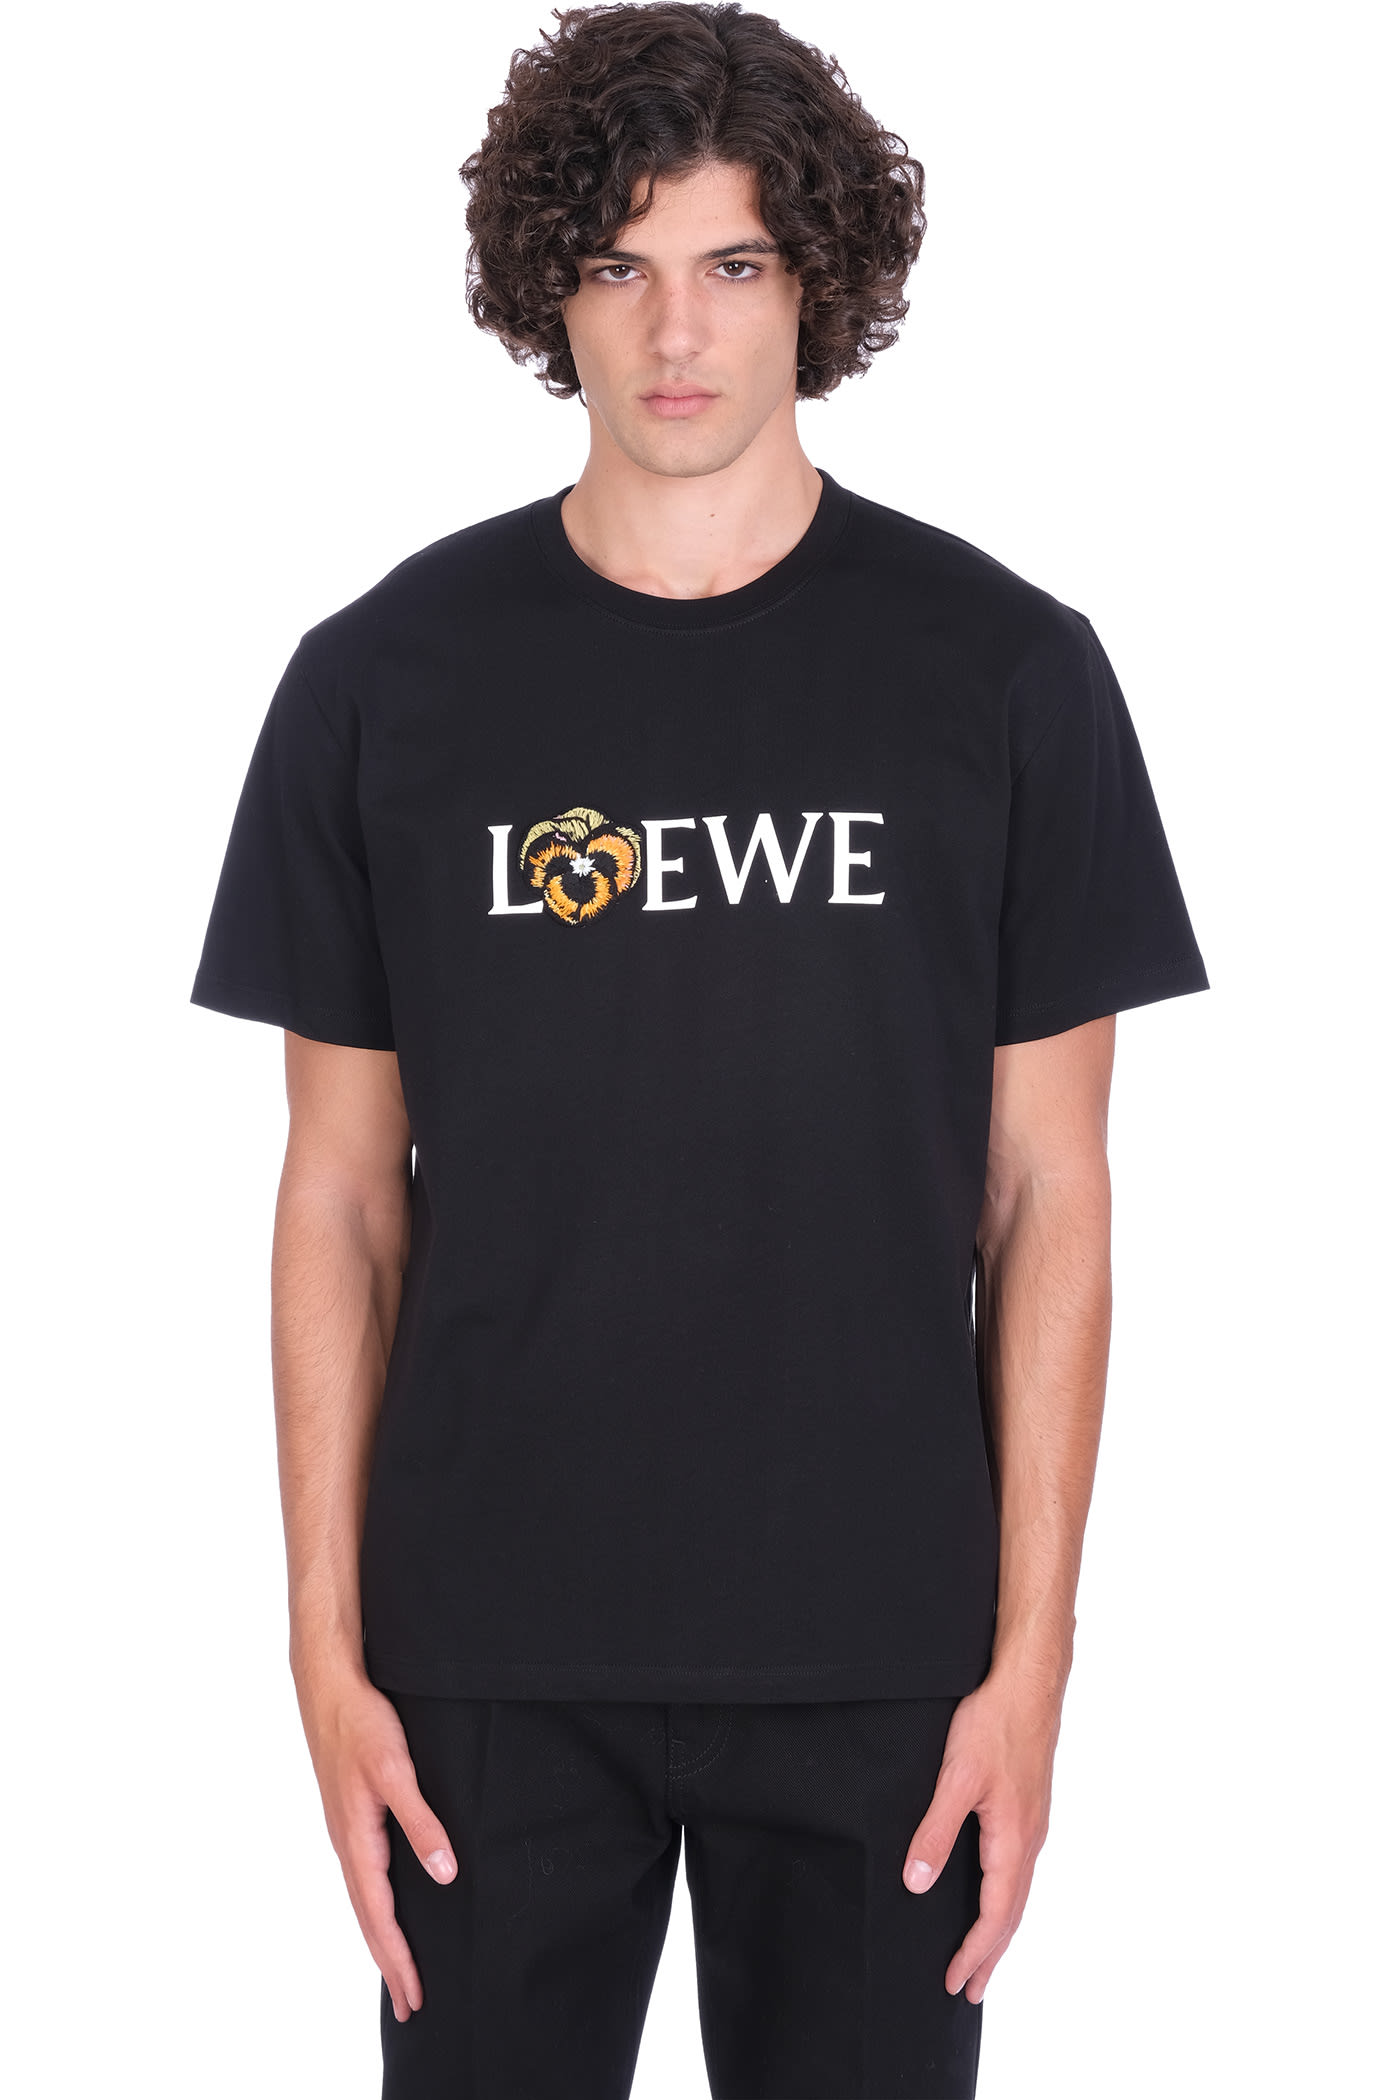 Loewe T-shirt In Black Polyester